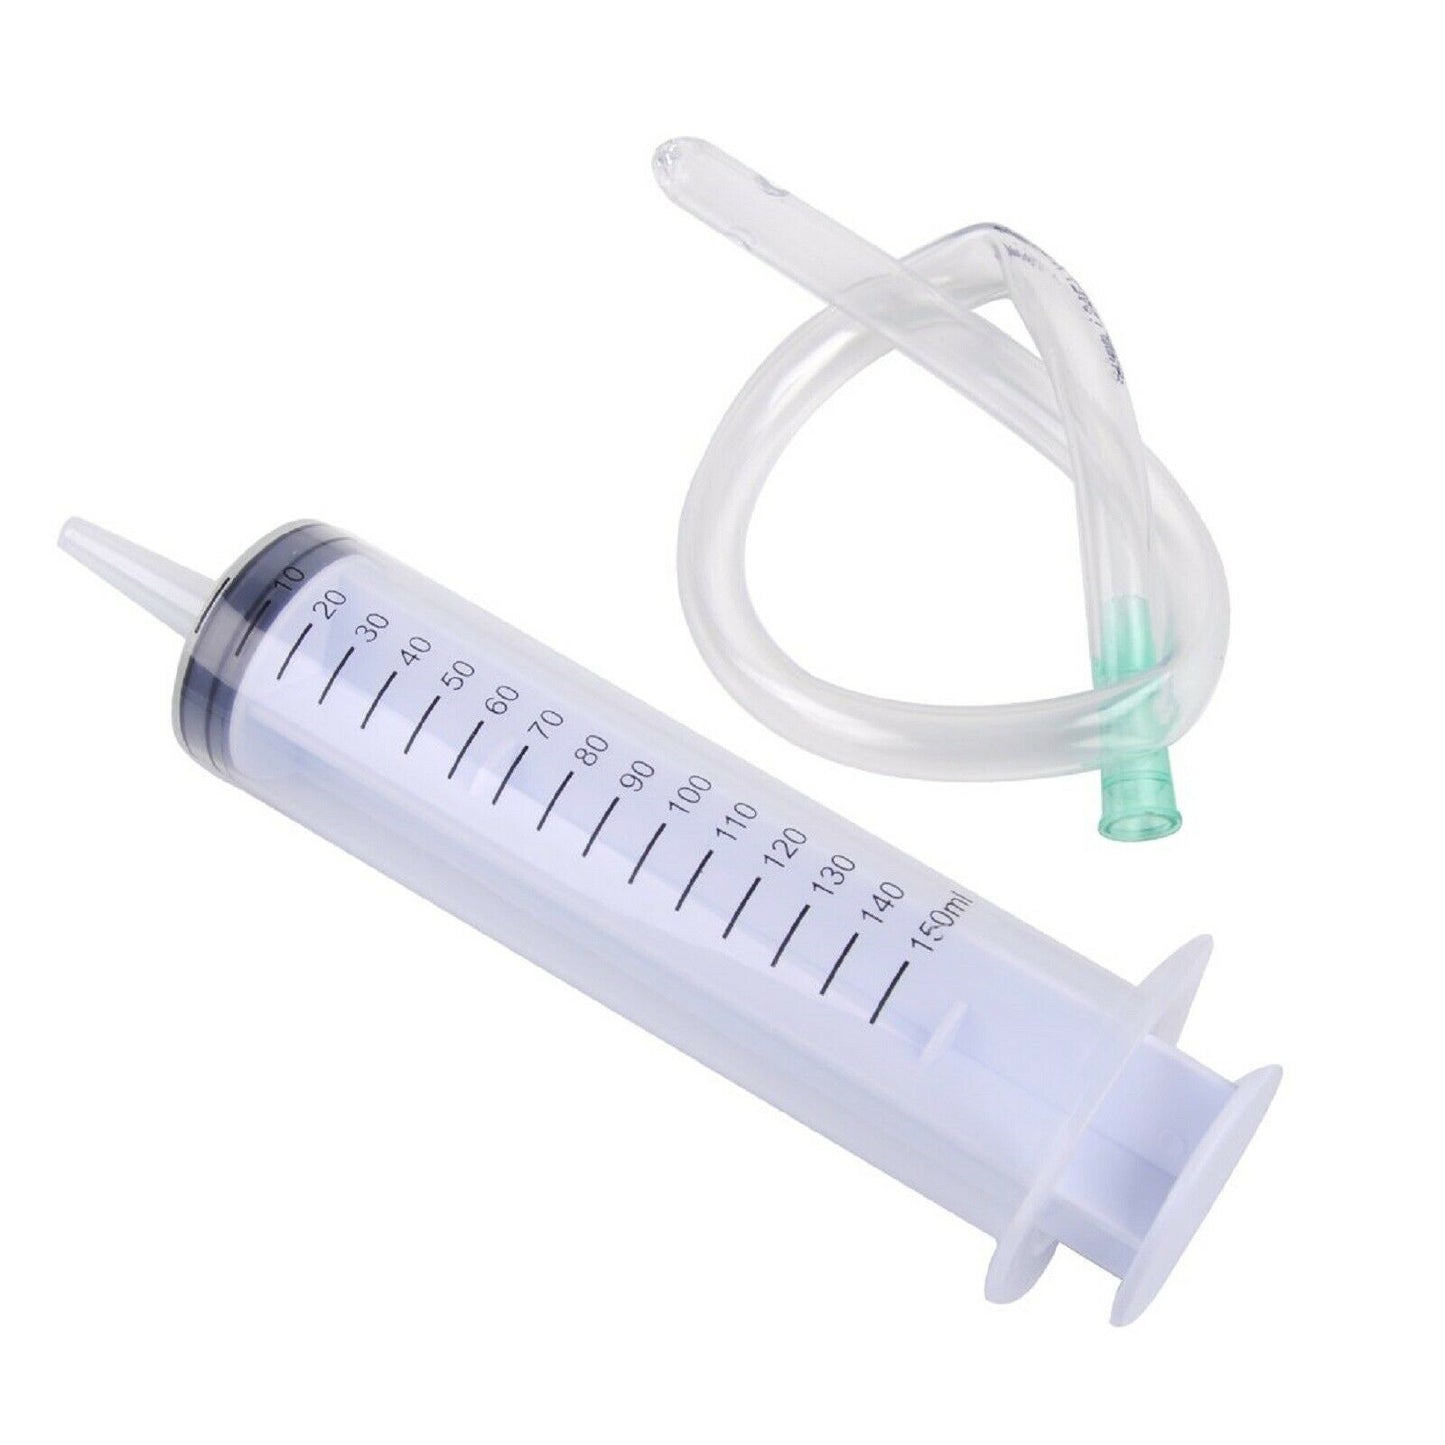 Reusable Douche Enema Pump Anal Vaginal Colon Rectal Cleaner Enema Bag Syringe